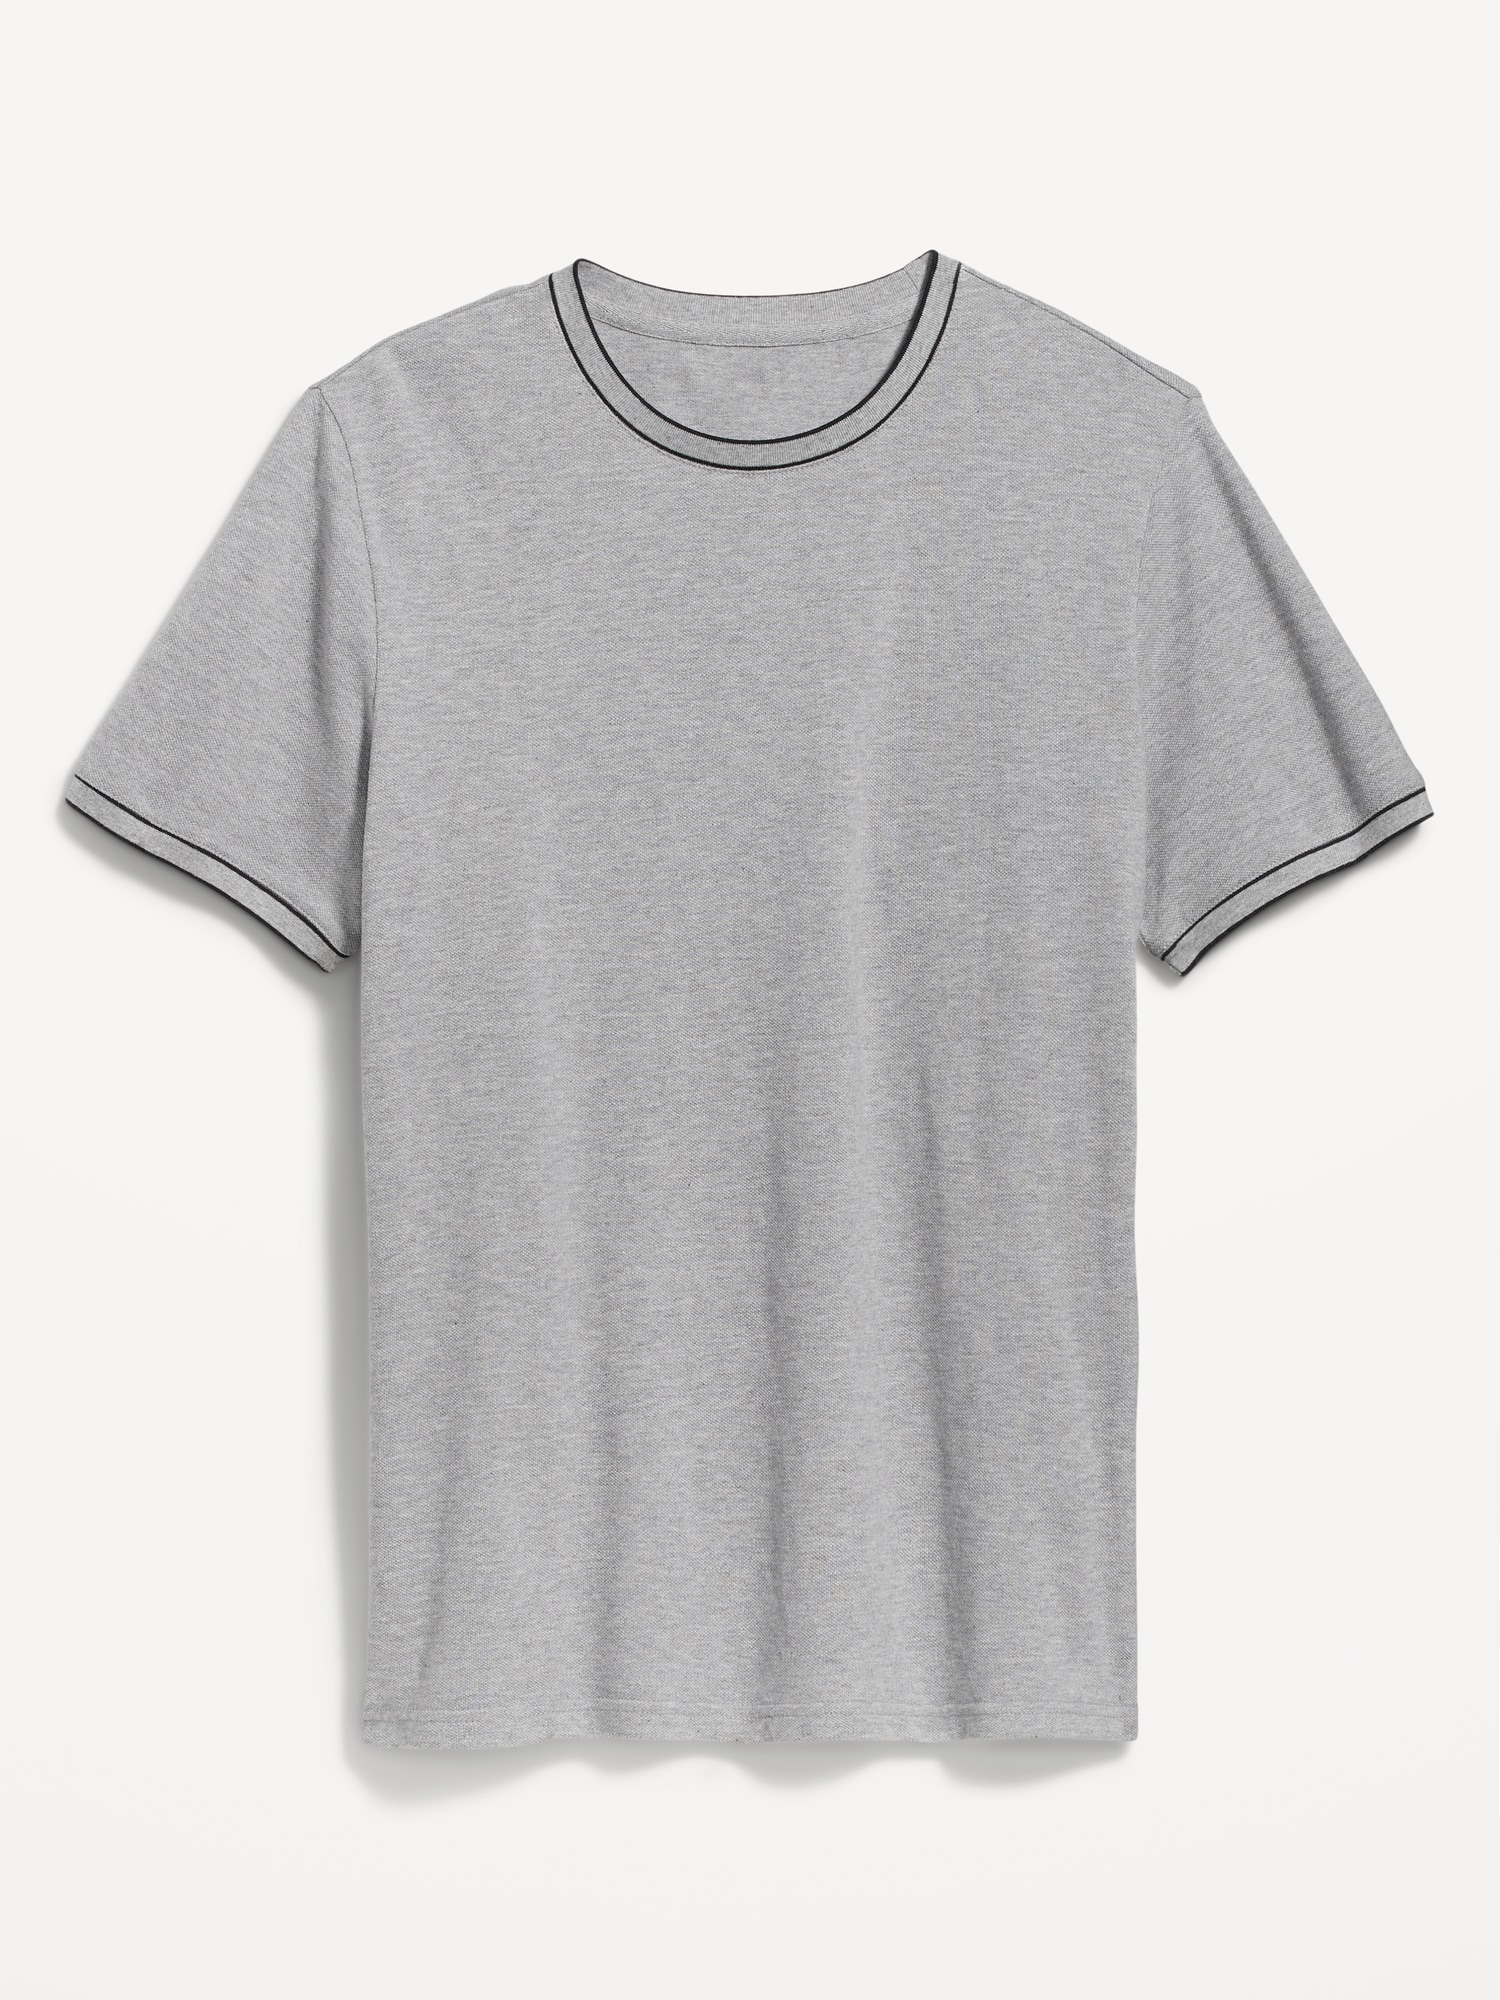 Old Navy Moisture-Wicking Pique T-Shirt for Men gray. 1